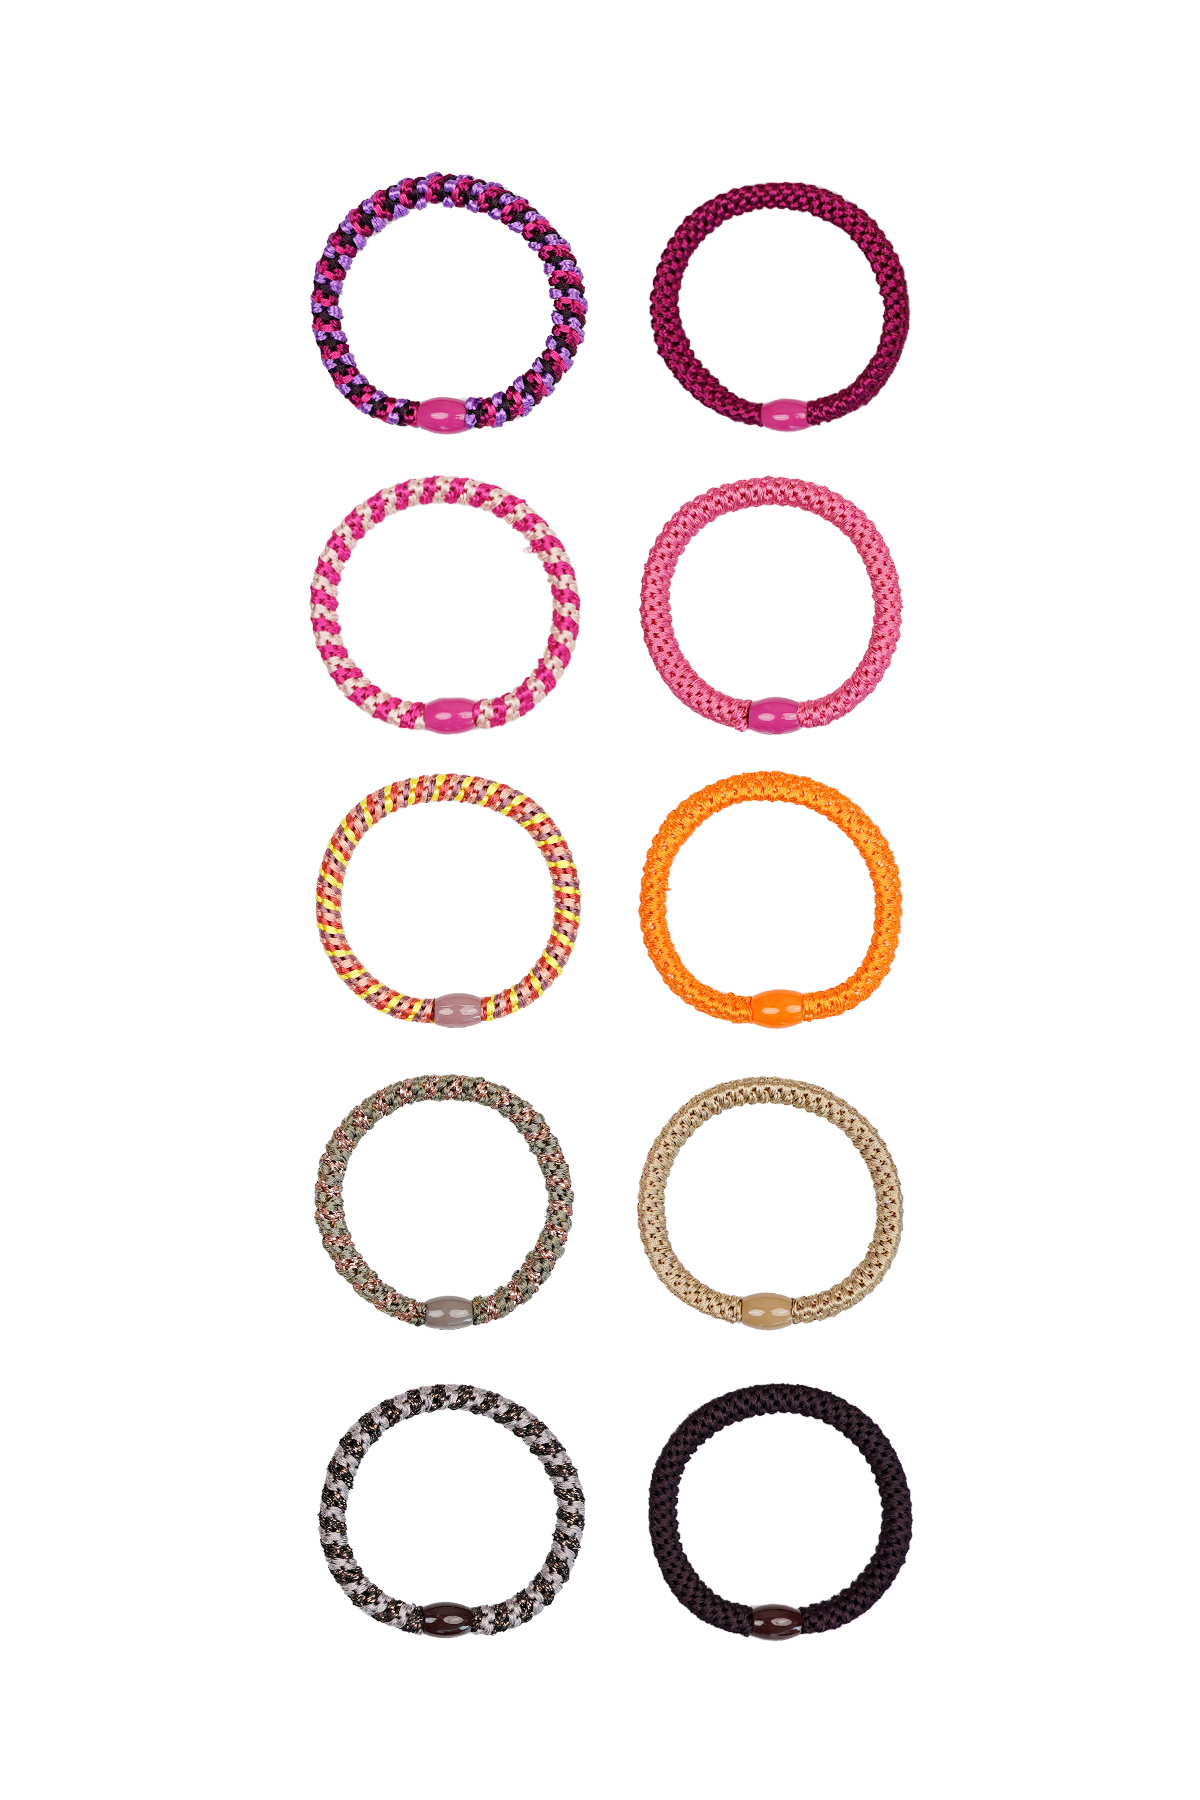 Hair elastic bracelets box bright and basic - multi h5 